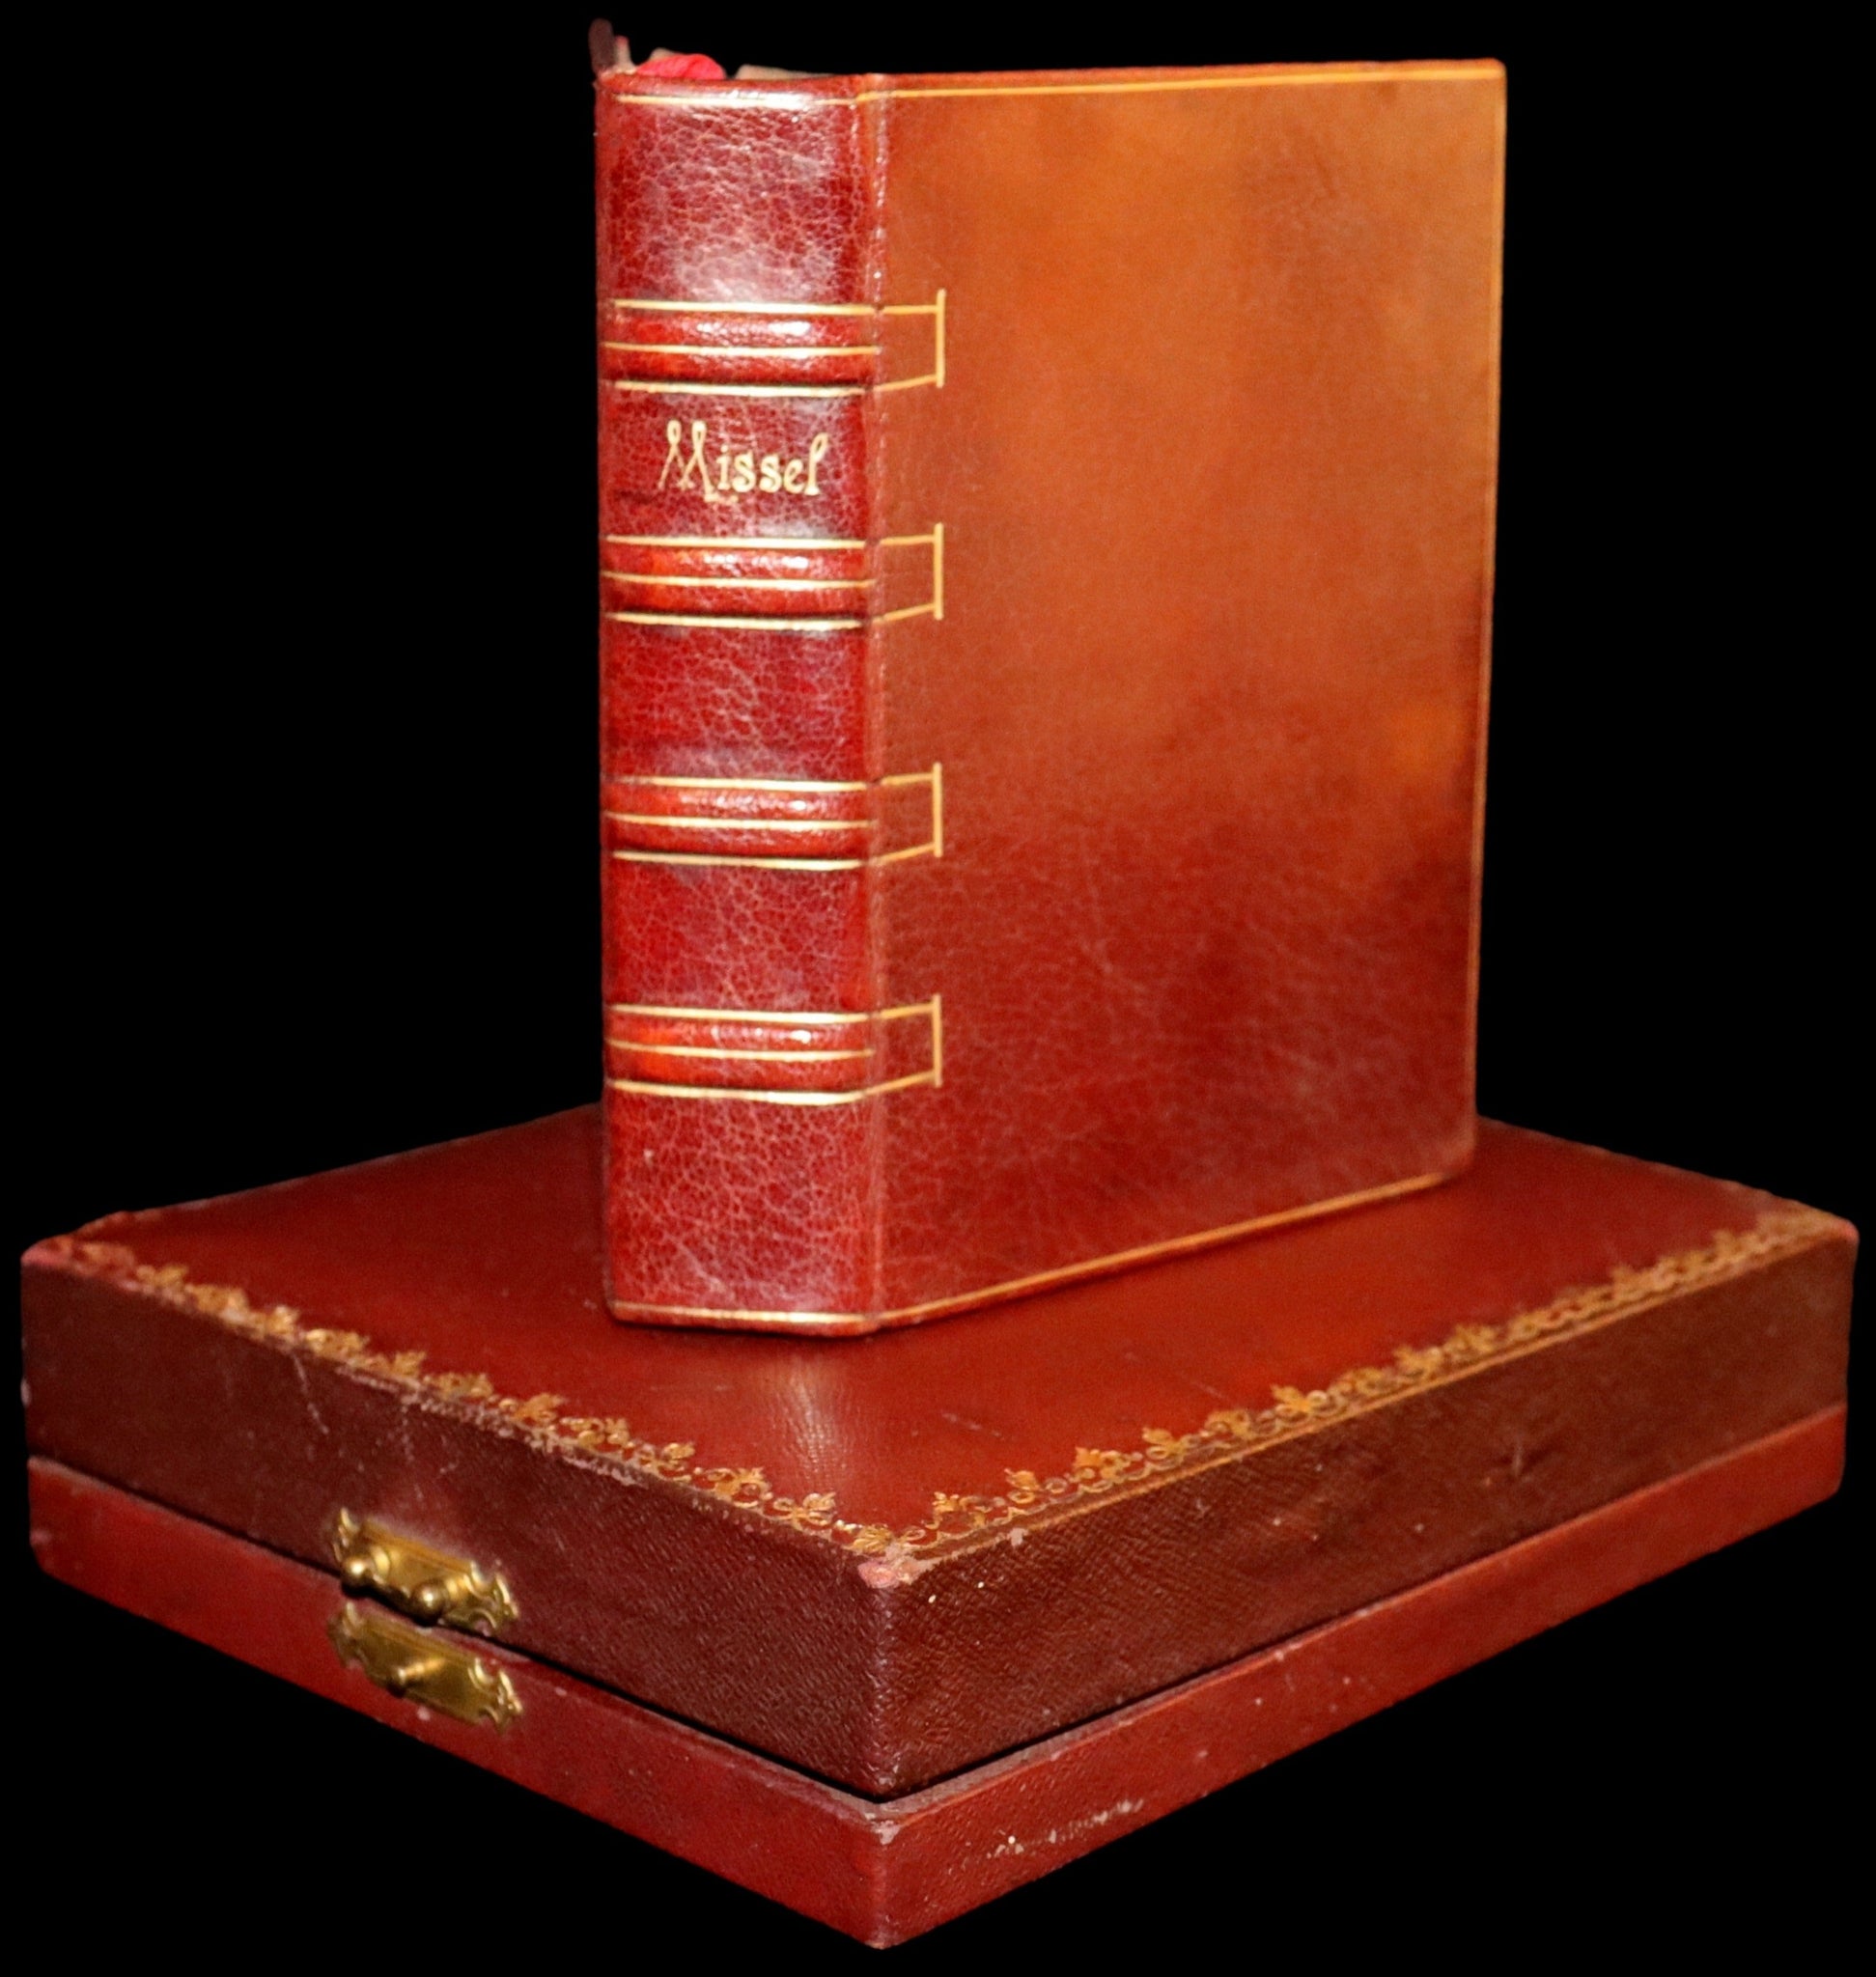 1898 Rare French Book in his box - Missal of Venerable JOAN OF ARC - Missel de la Venerable JEANNE D'ARC.